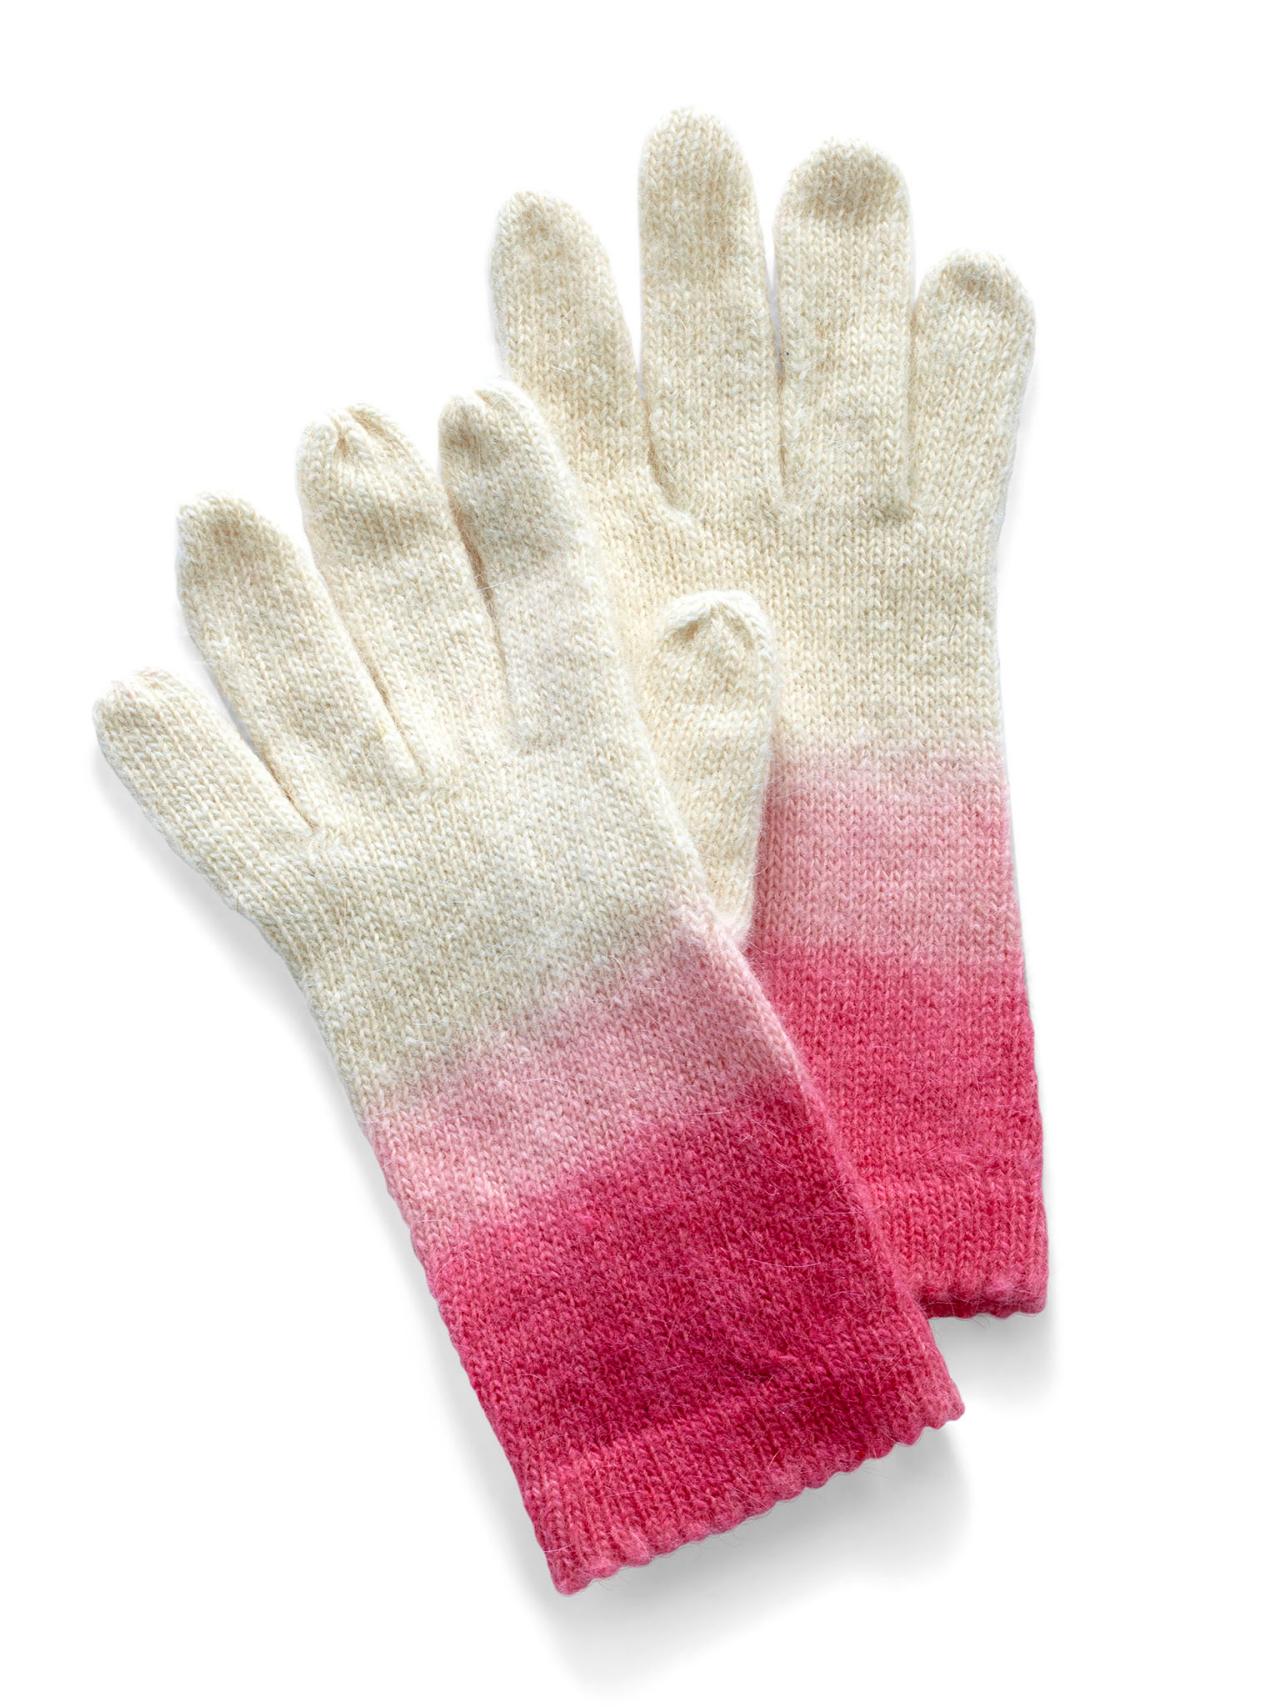 Diy dip dye gloves